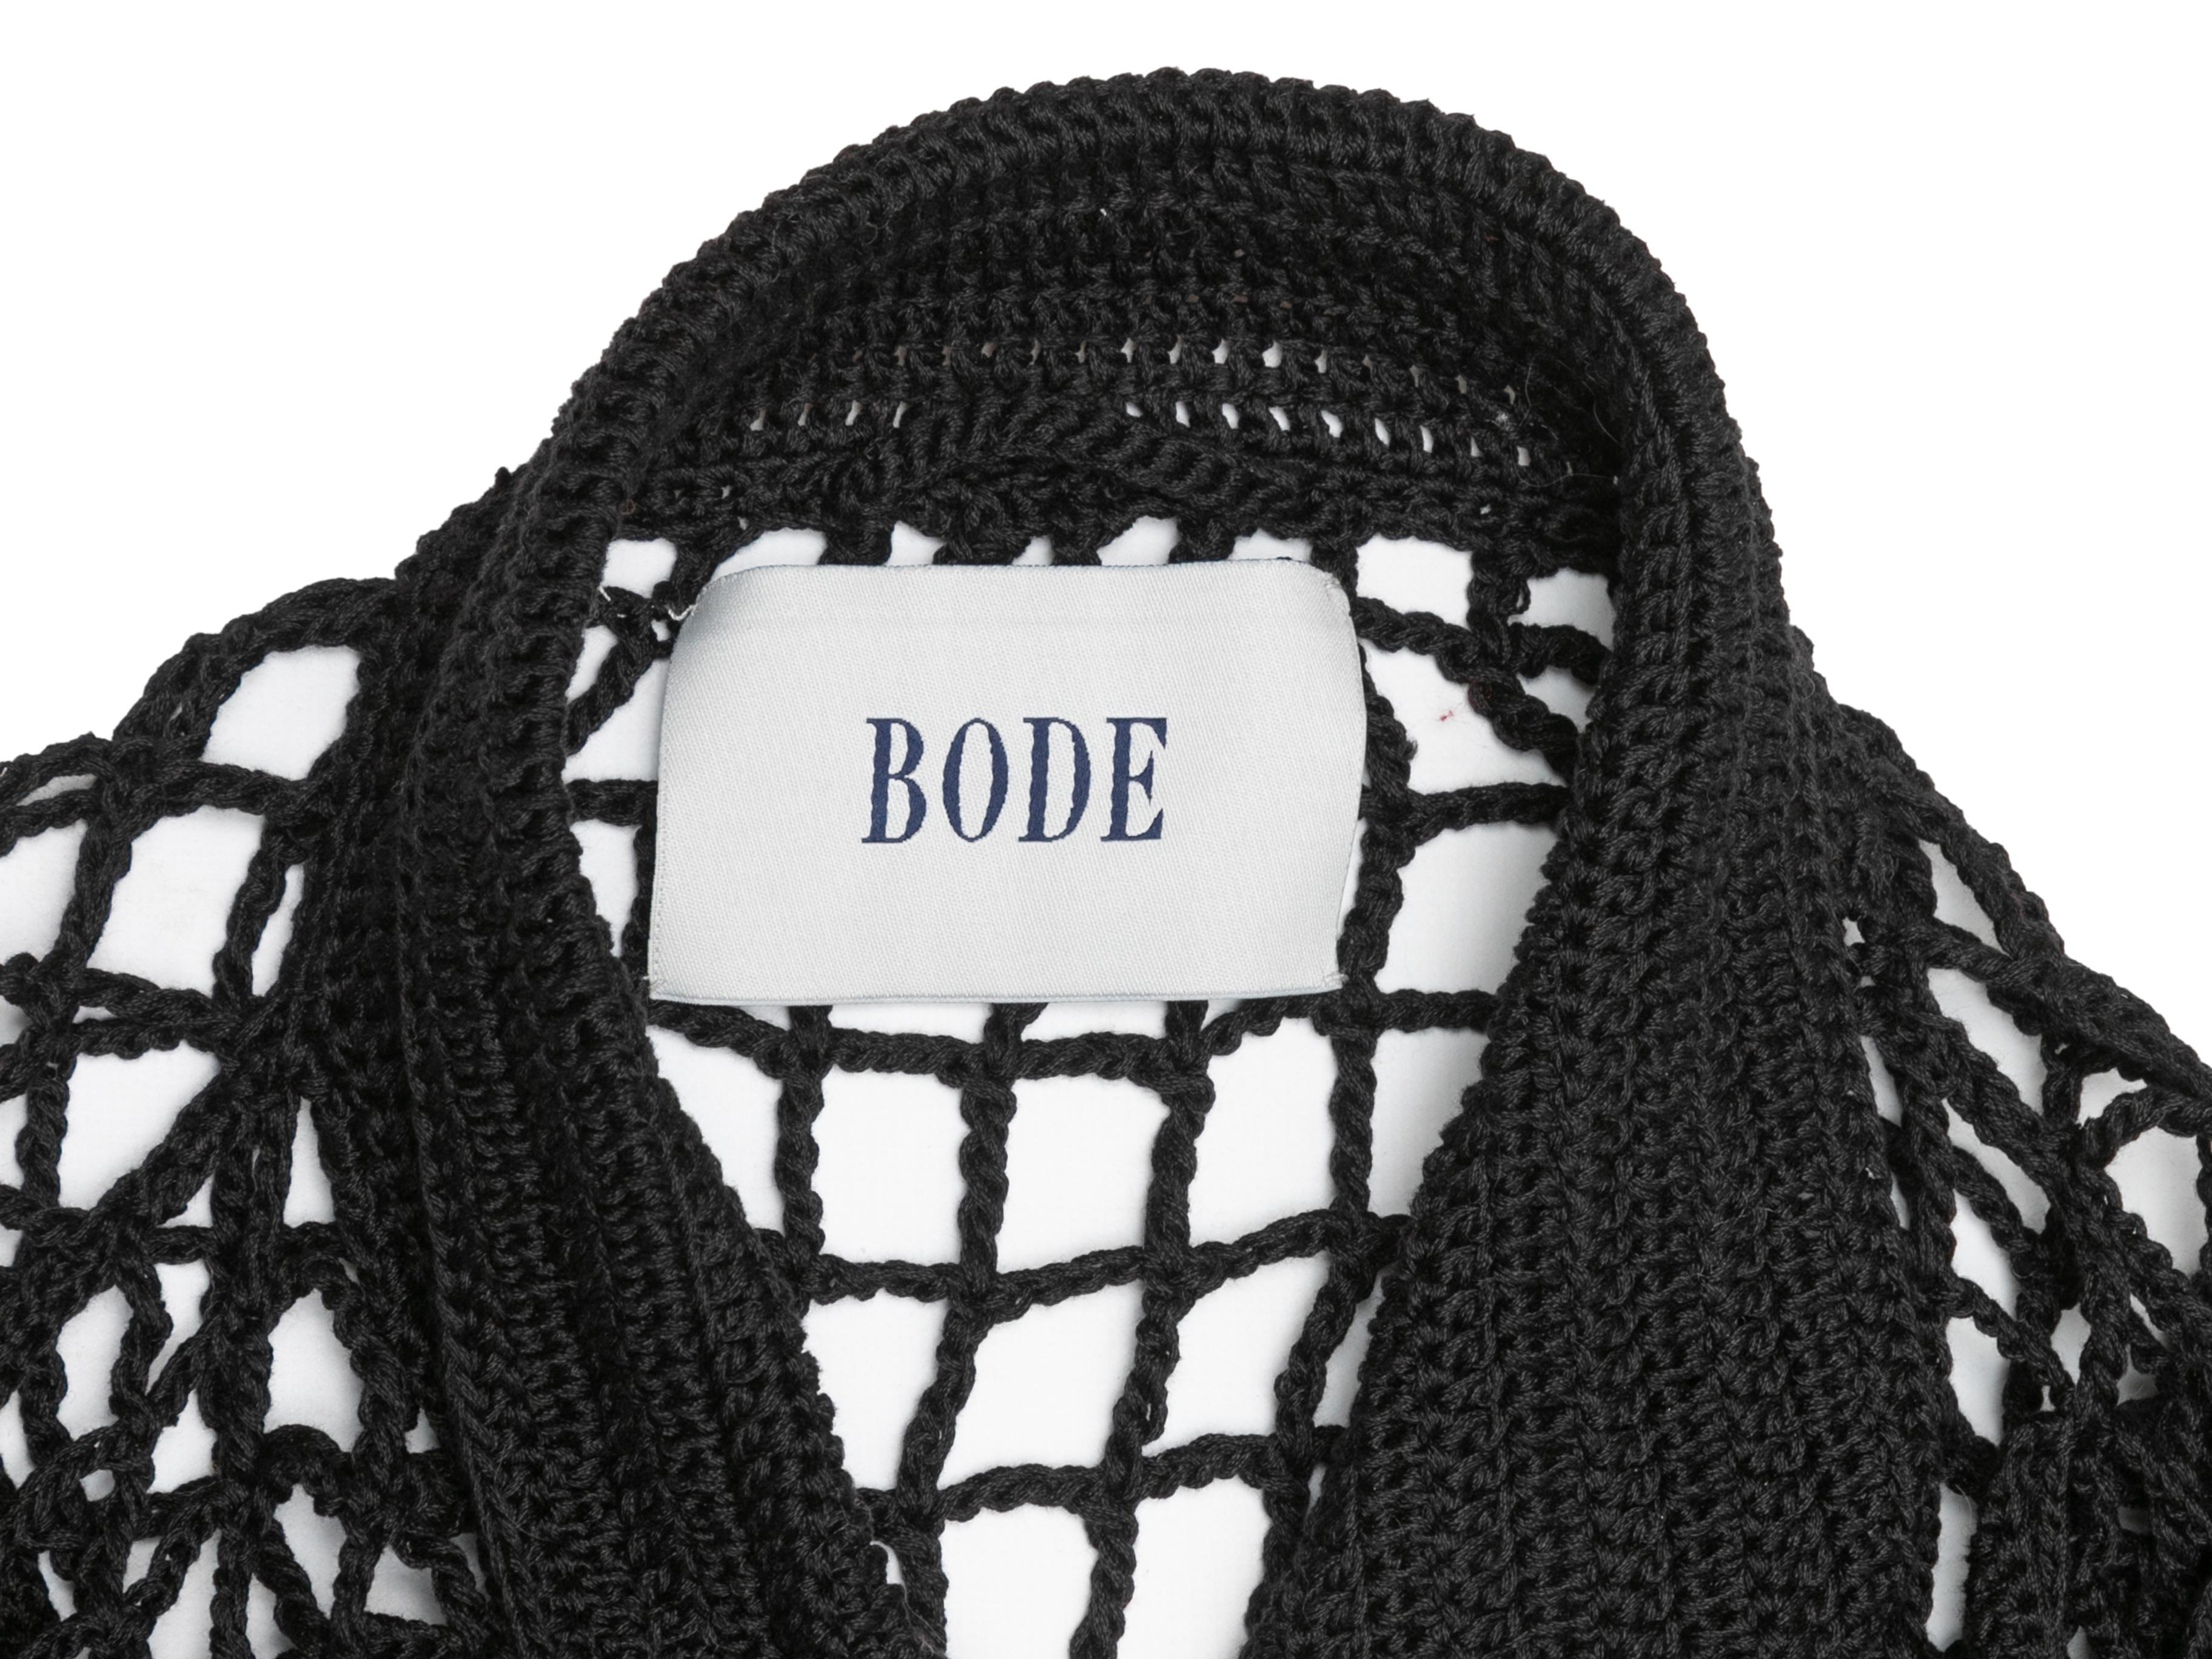 Black Bode Open Crochet Cardigan Size S/M 2